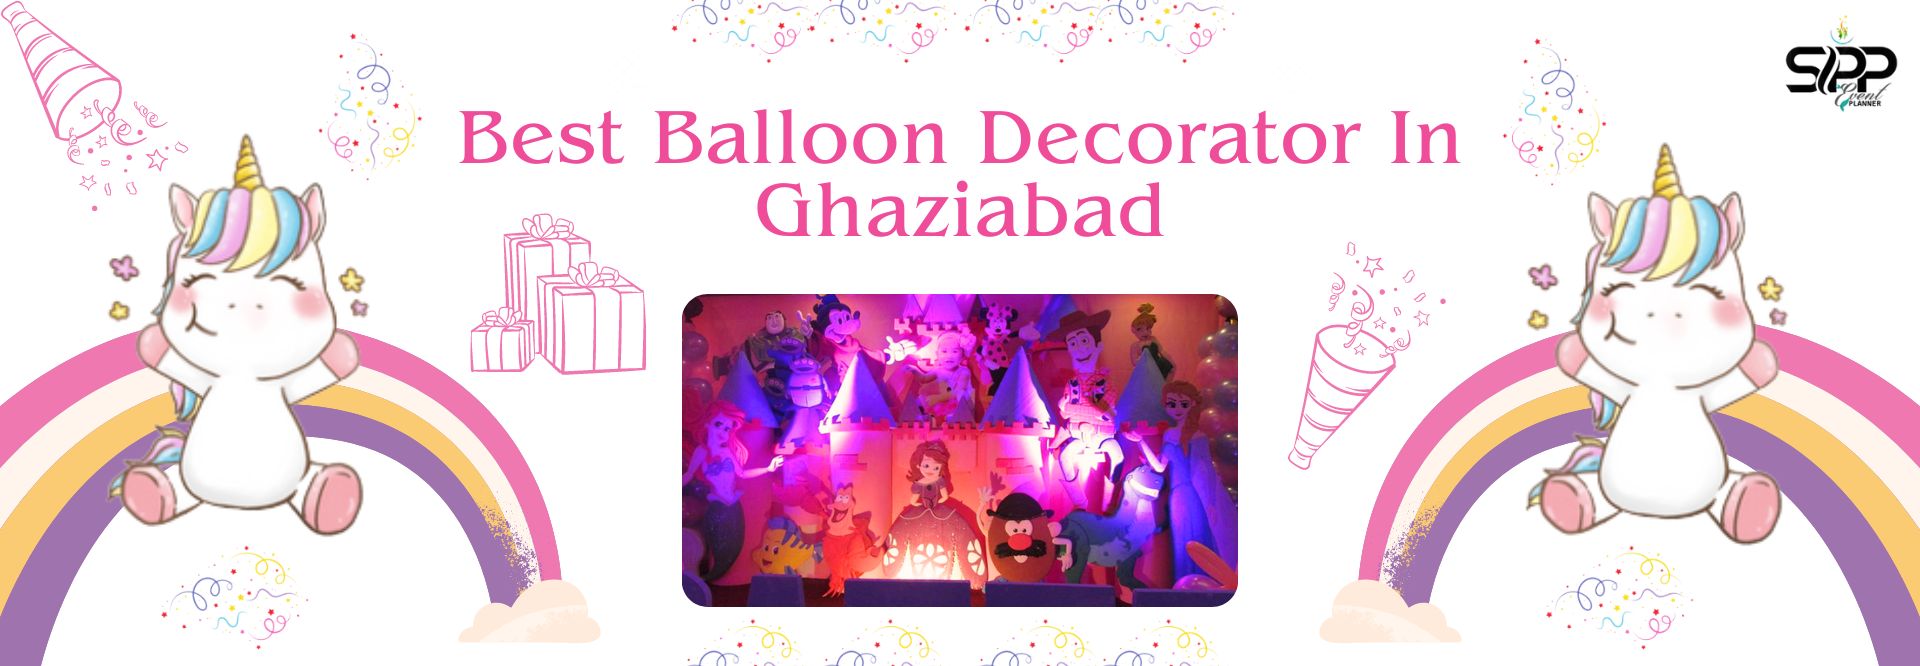 Best Balloon Decorator In Ghaziabad